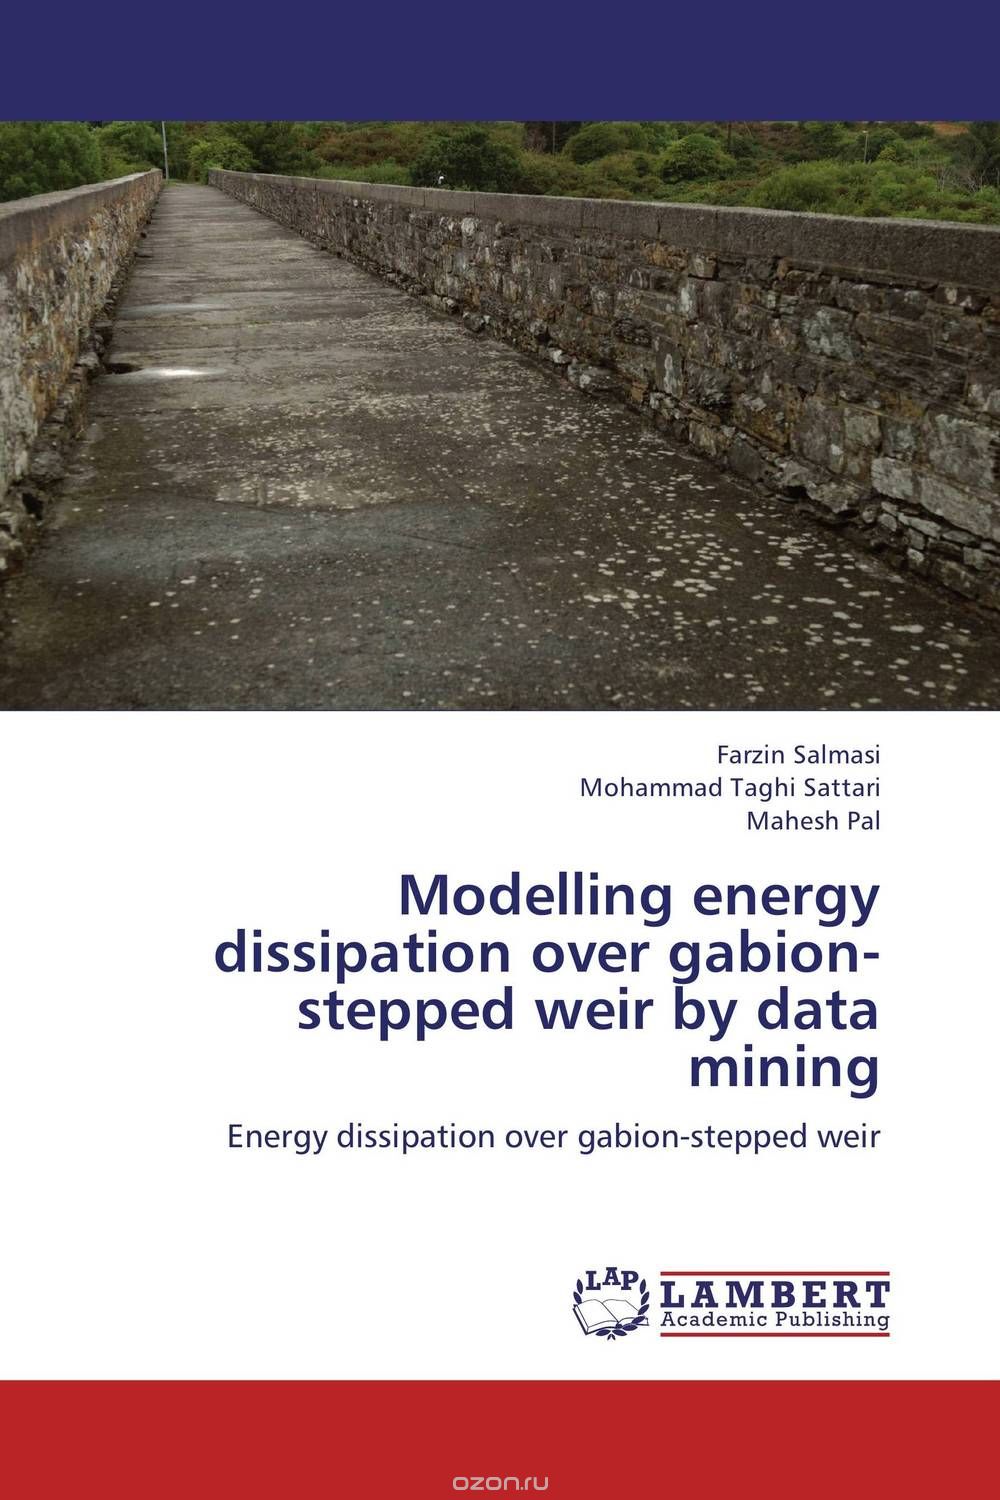 Скачать книгу "Modelling energy dissipation over gabion-stepped weir by data mining"